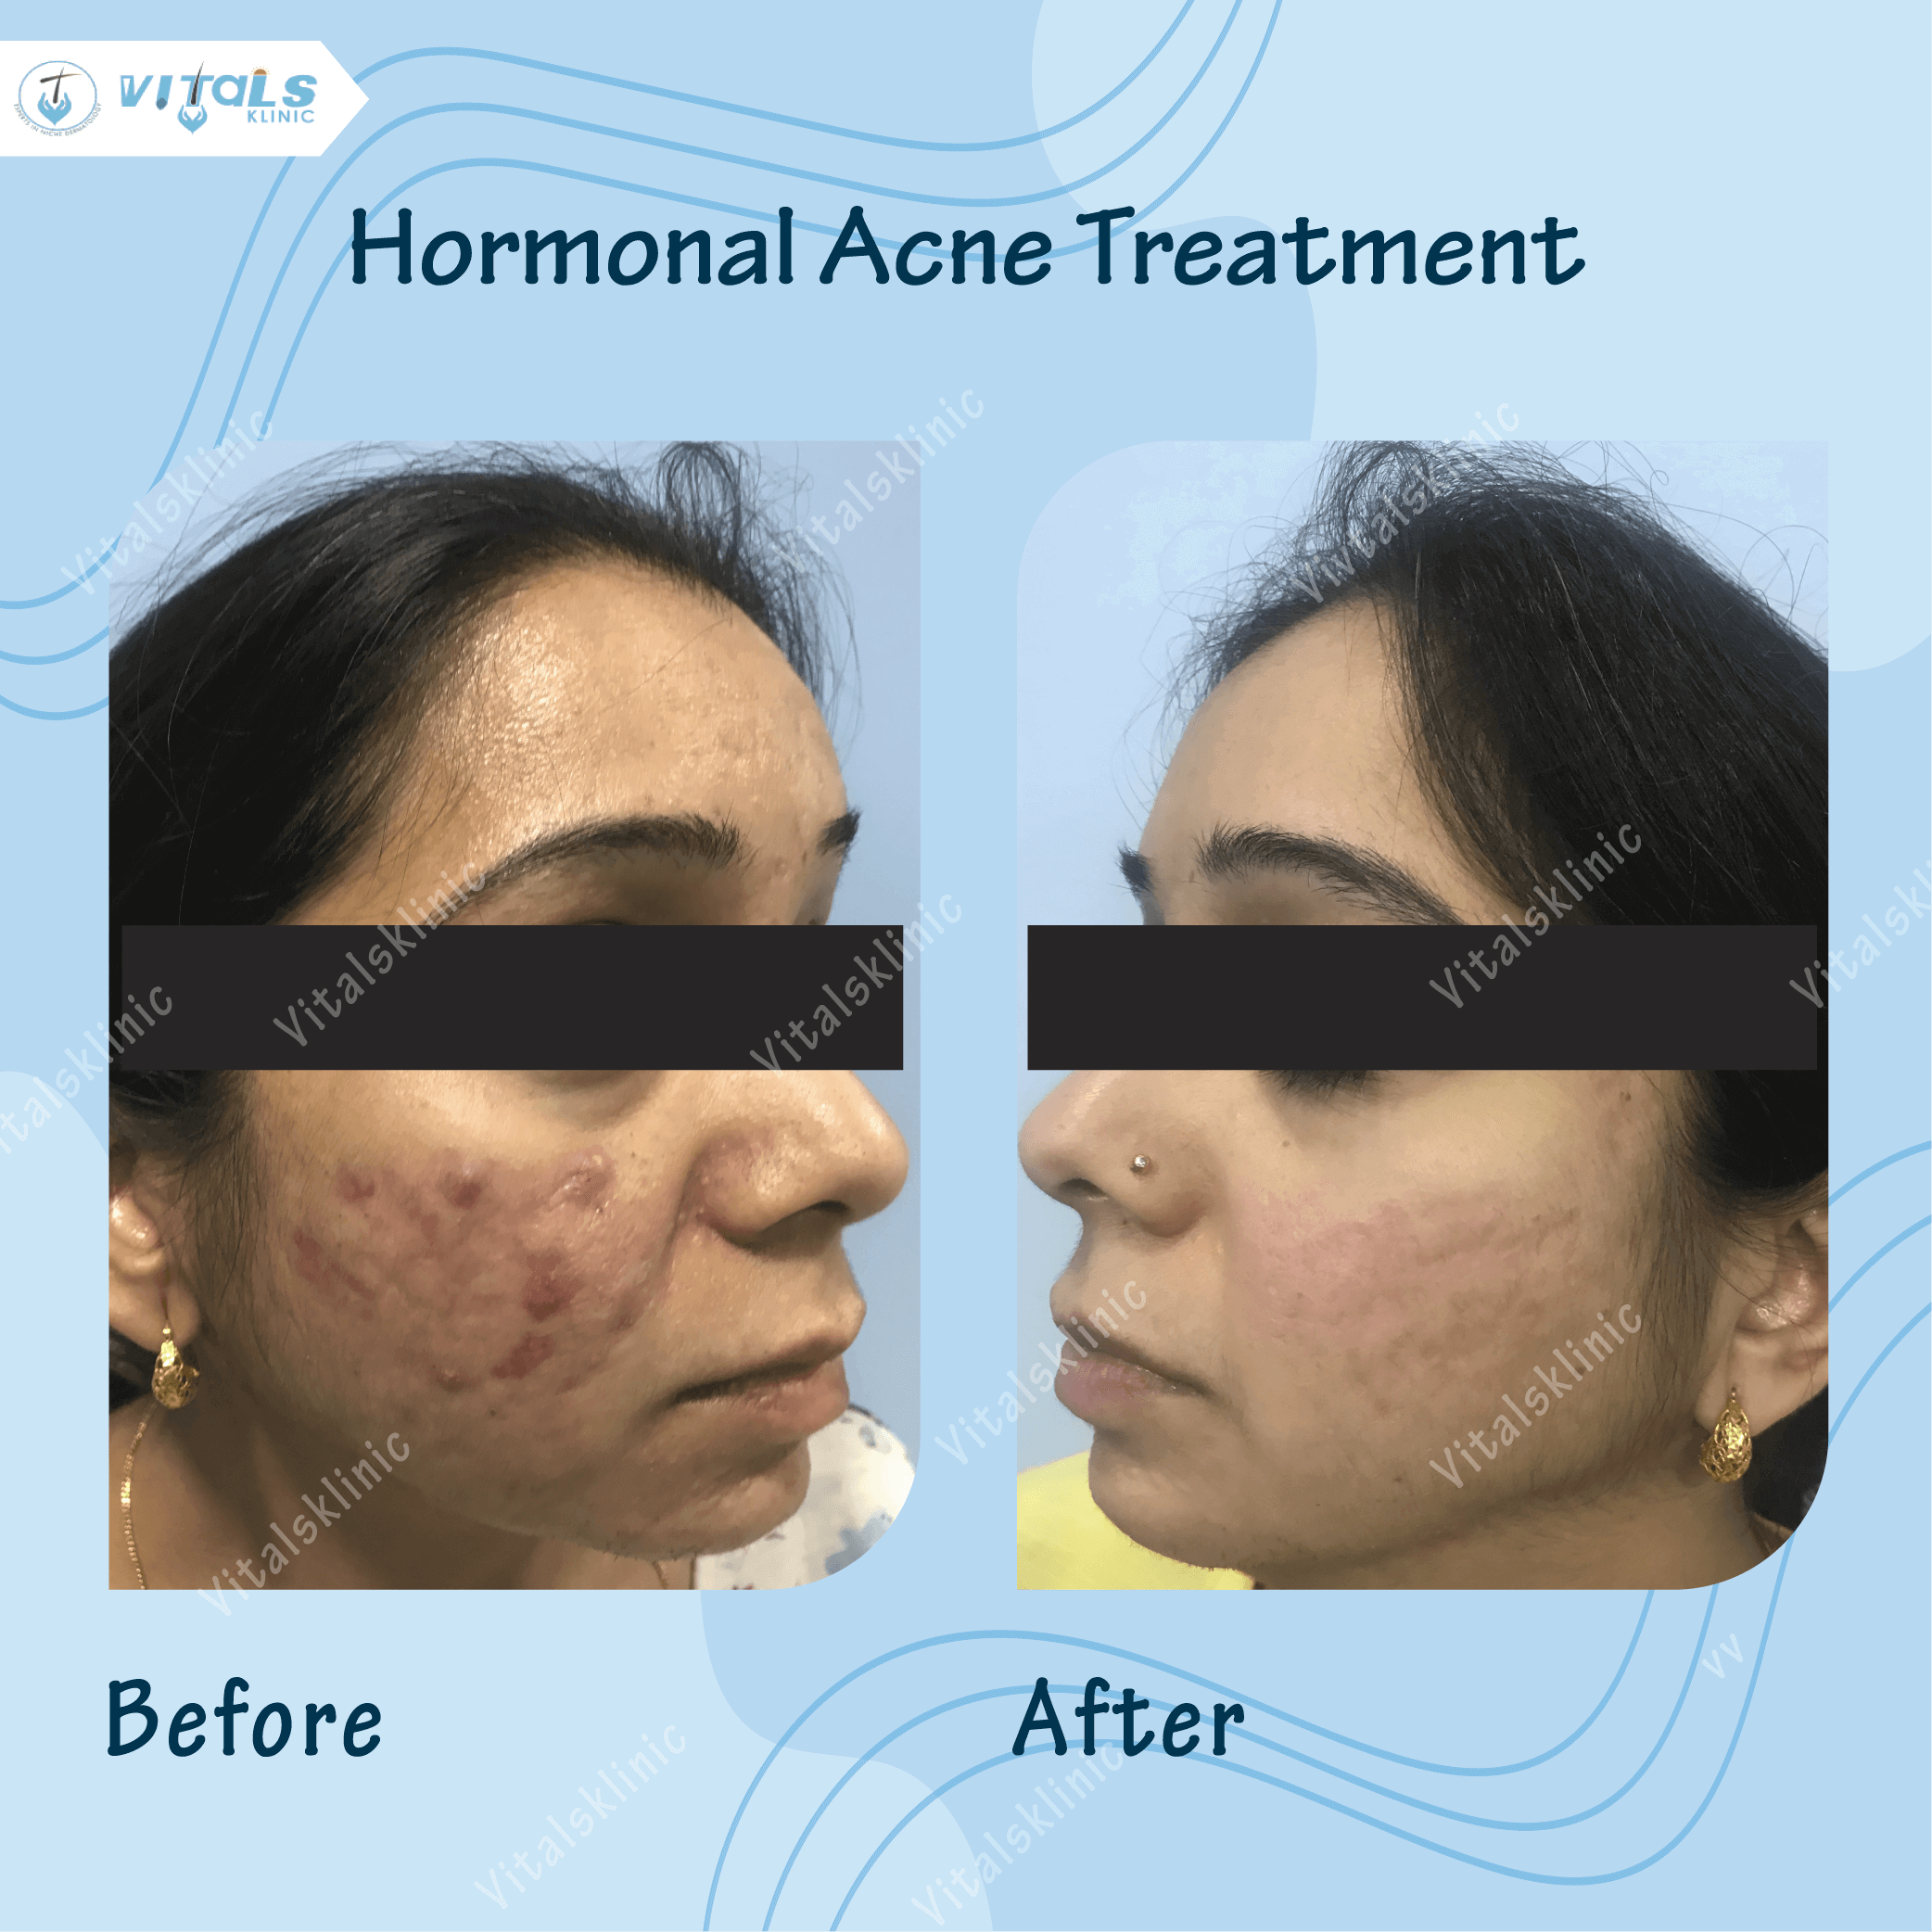 harmonal-acne-treatment